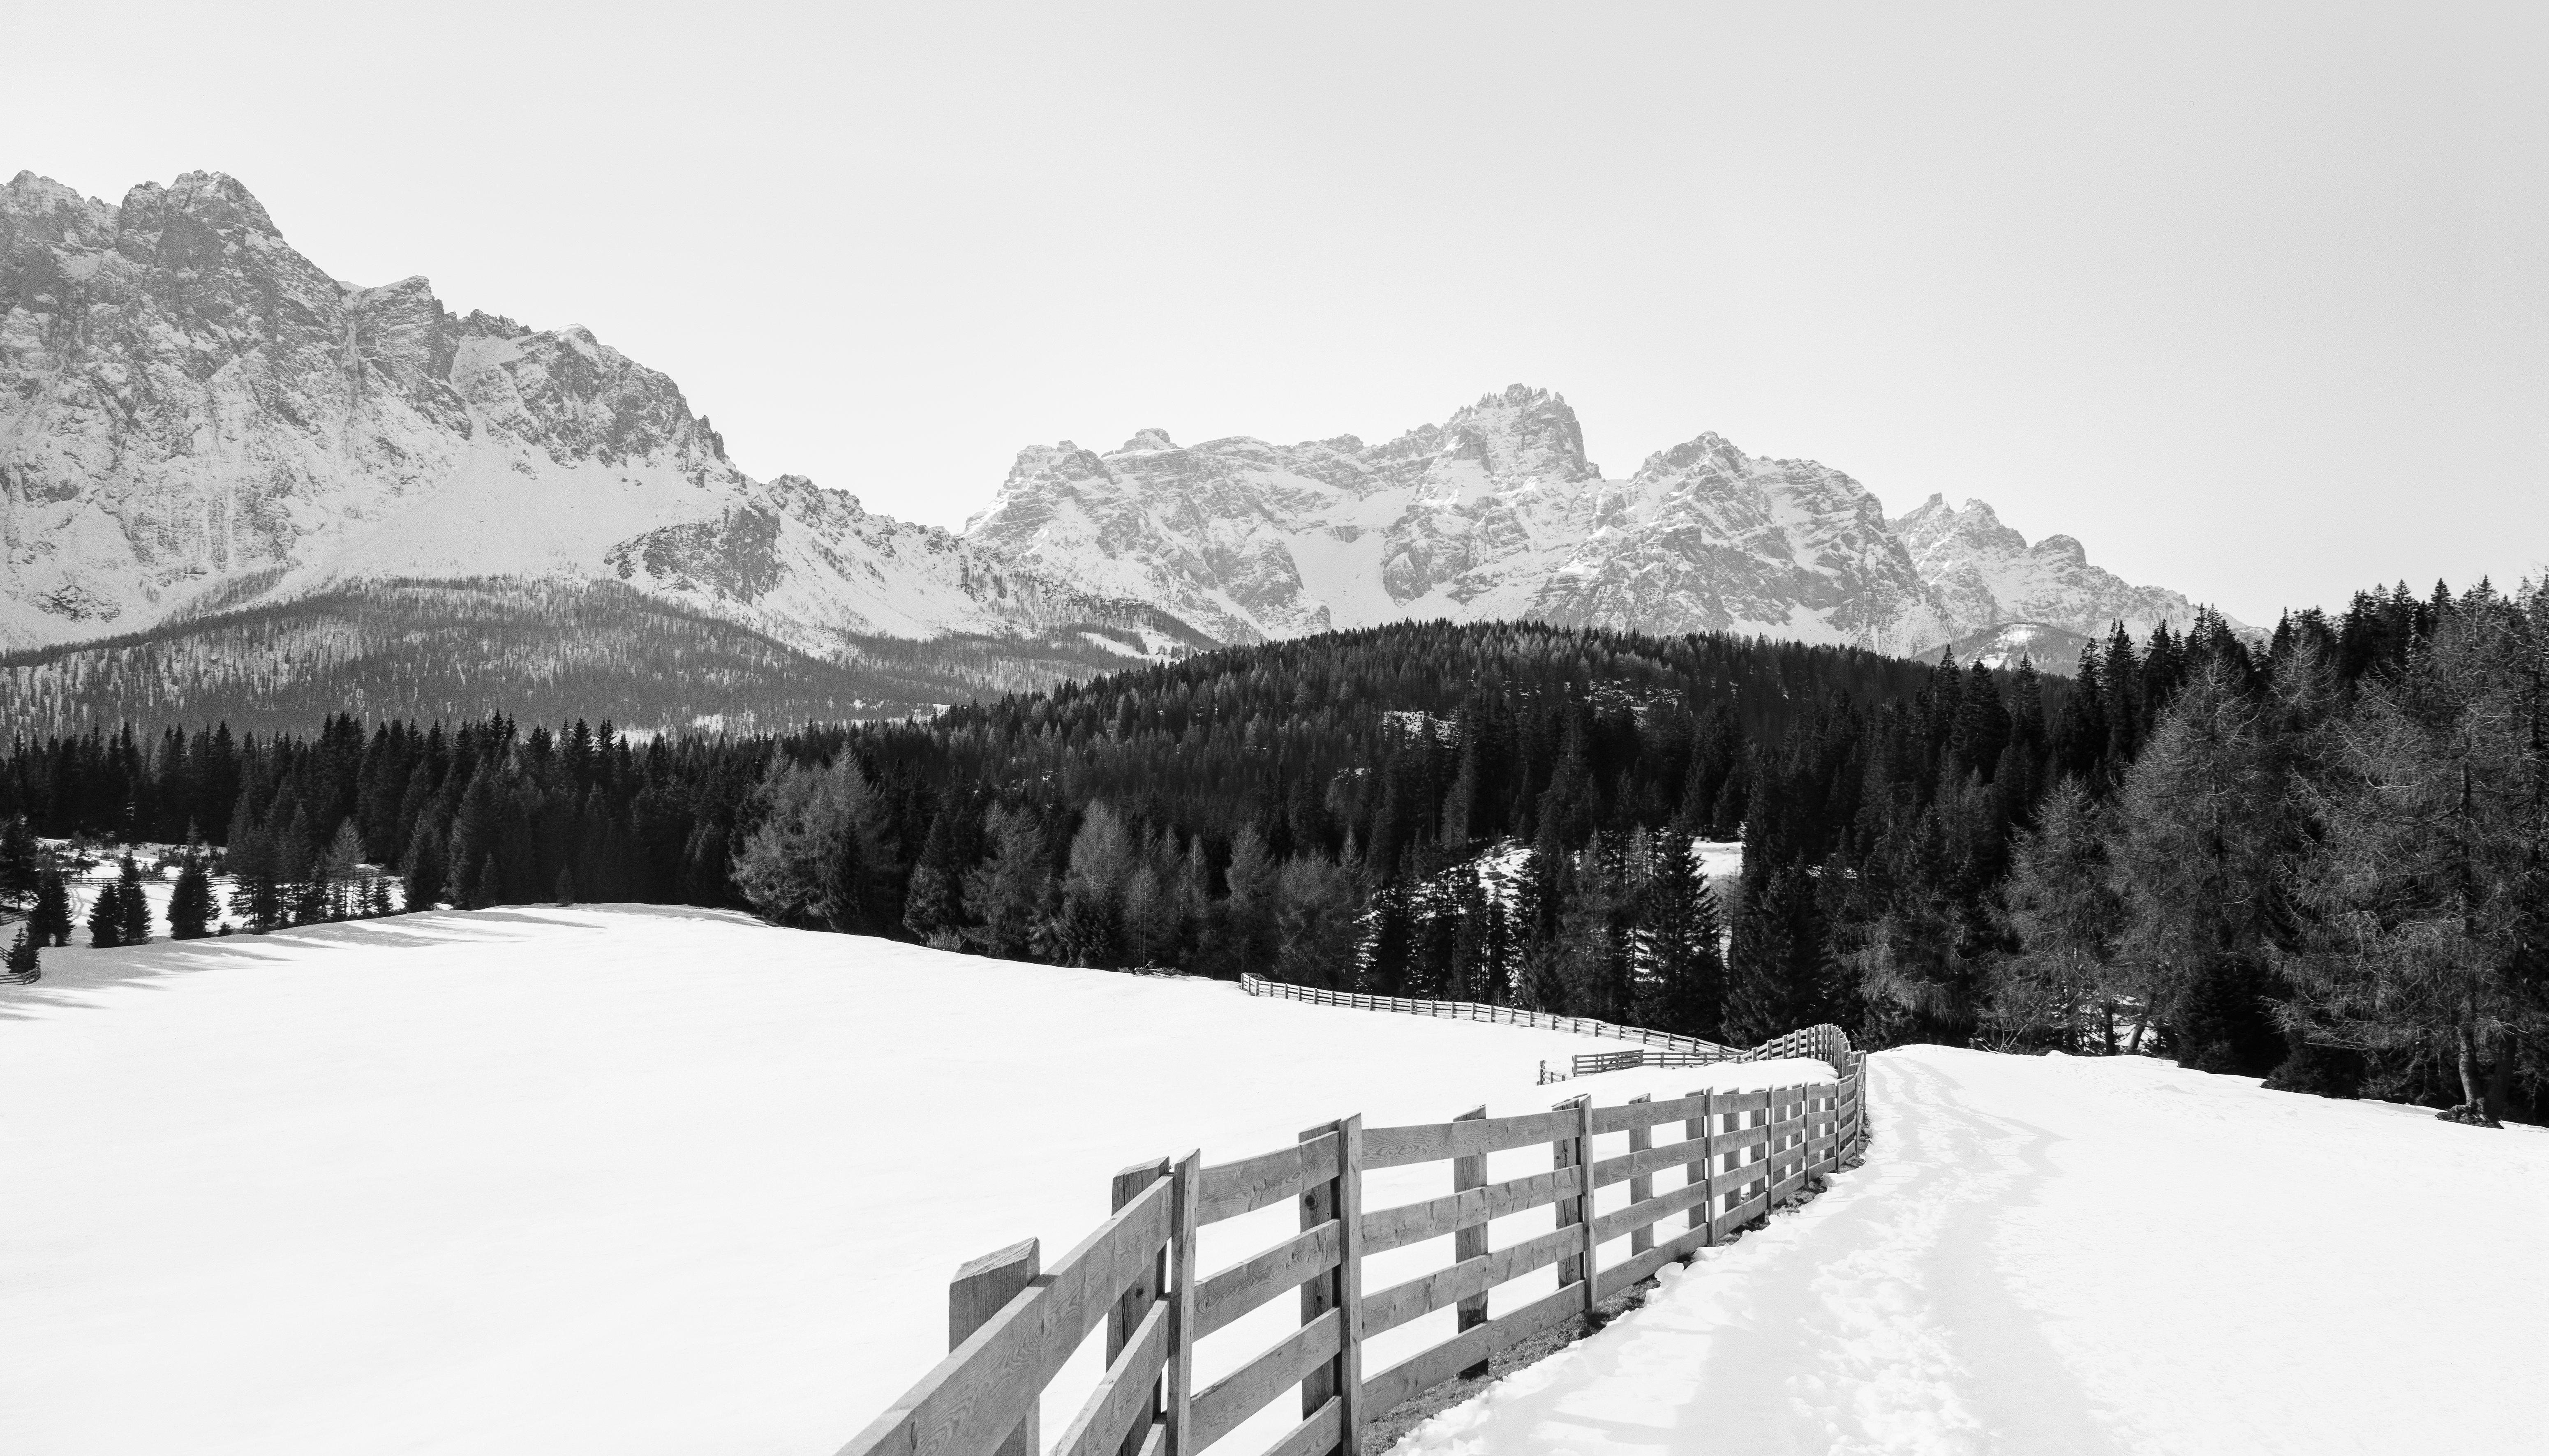 Dolomites n°2, Analogue Black and White Mountain Photography, Ltd. 20